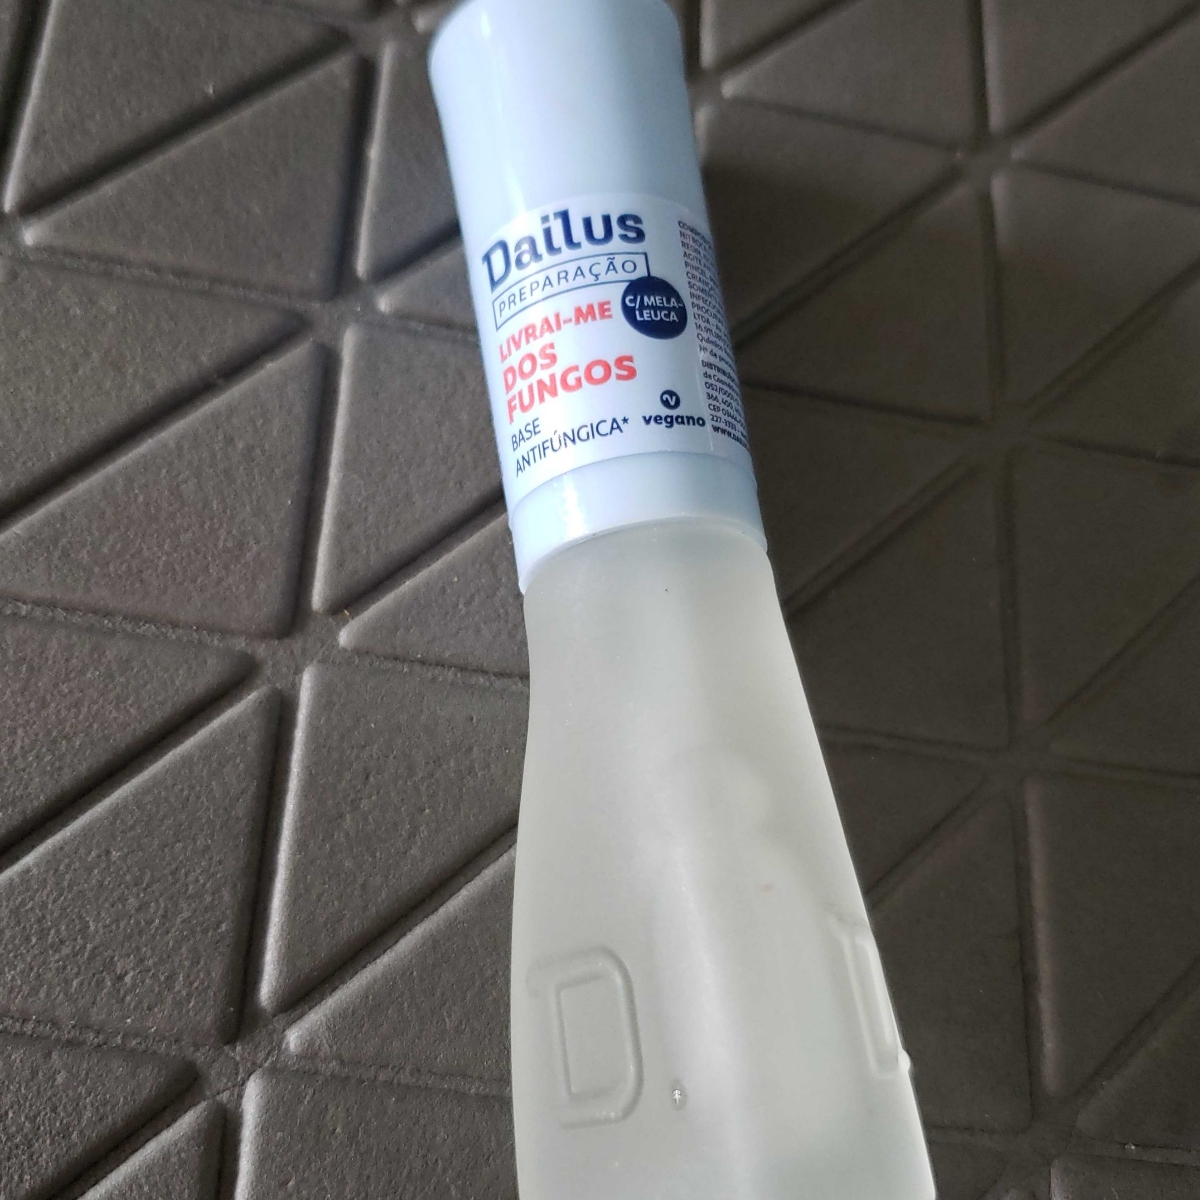 Dailus Base antifungica Review | abillion